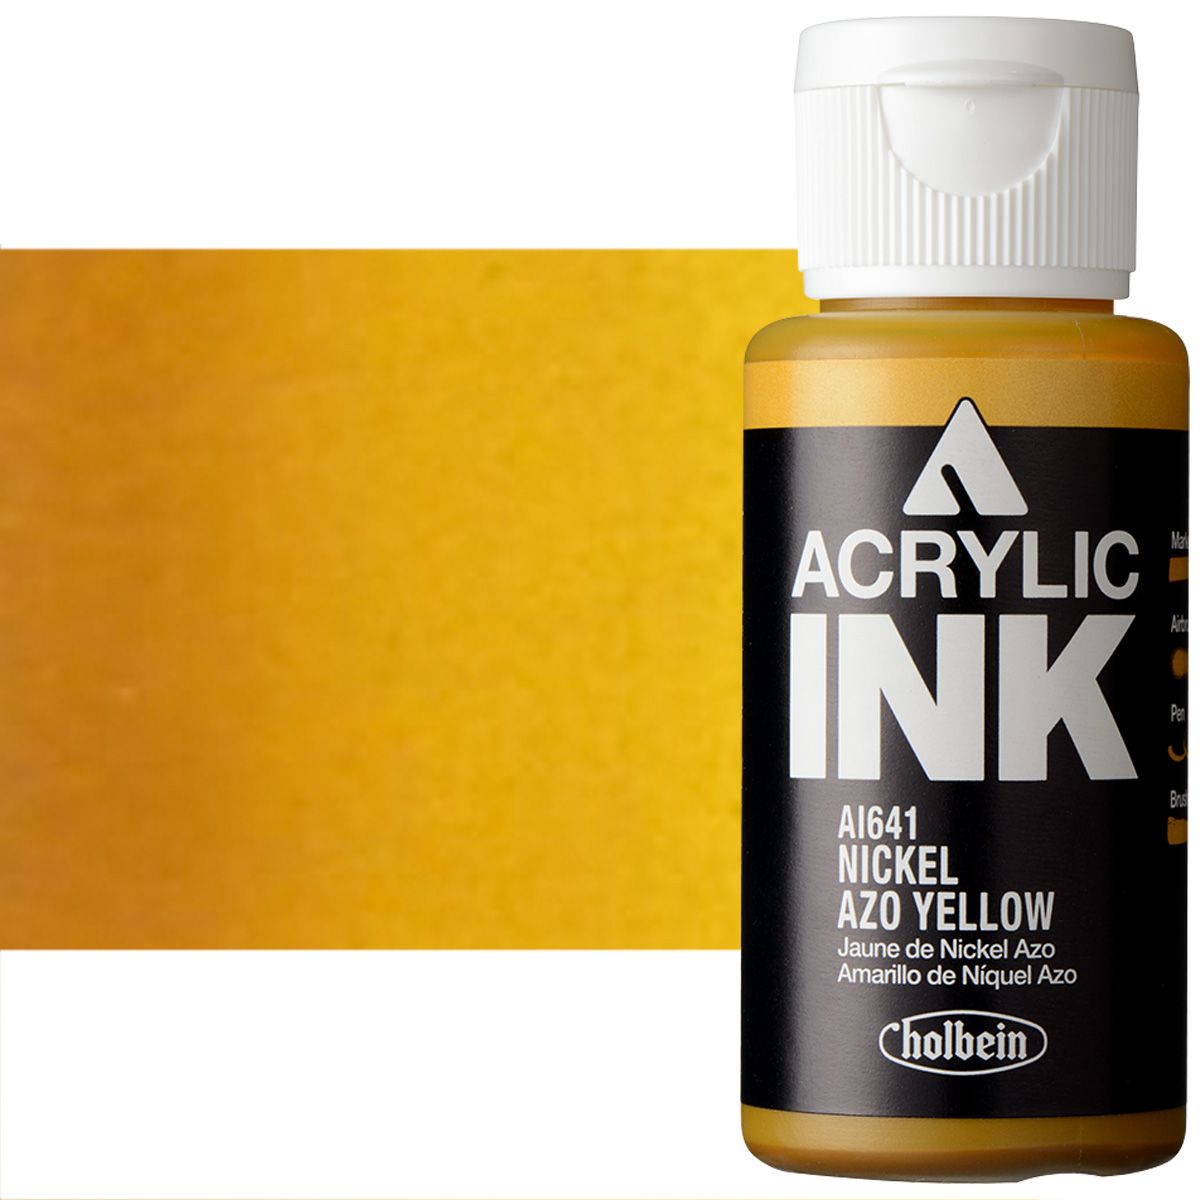 Holbein Acrylic Ink - Nickel Azo Yellow, 30ml